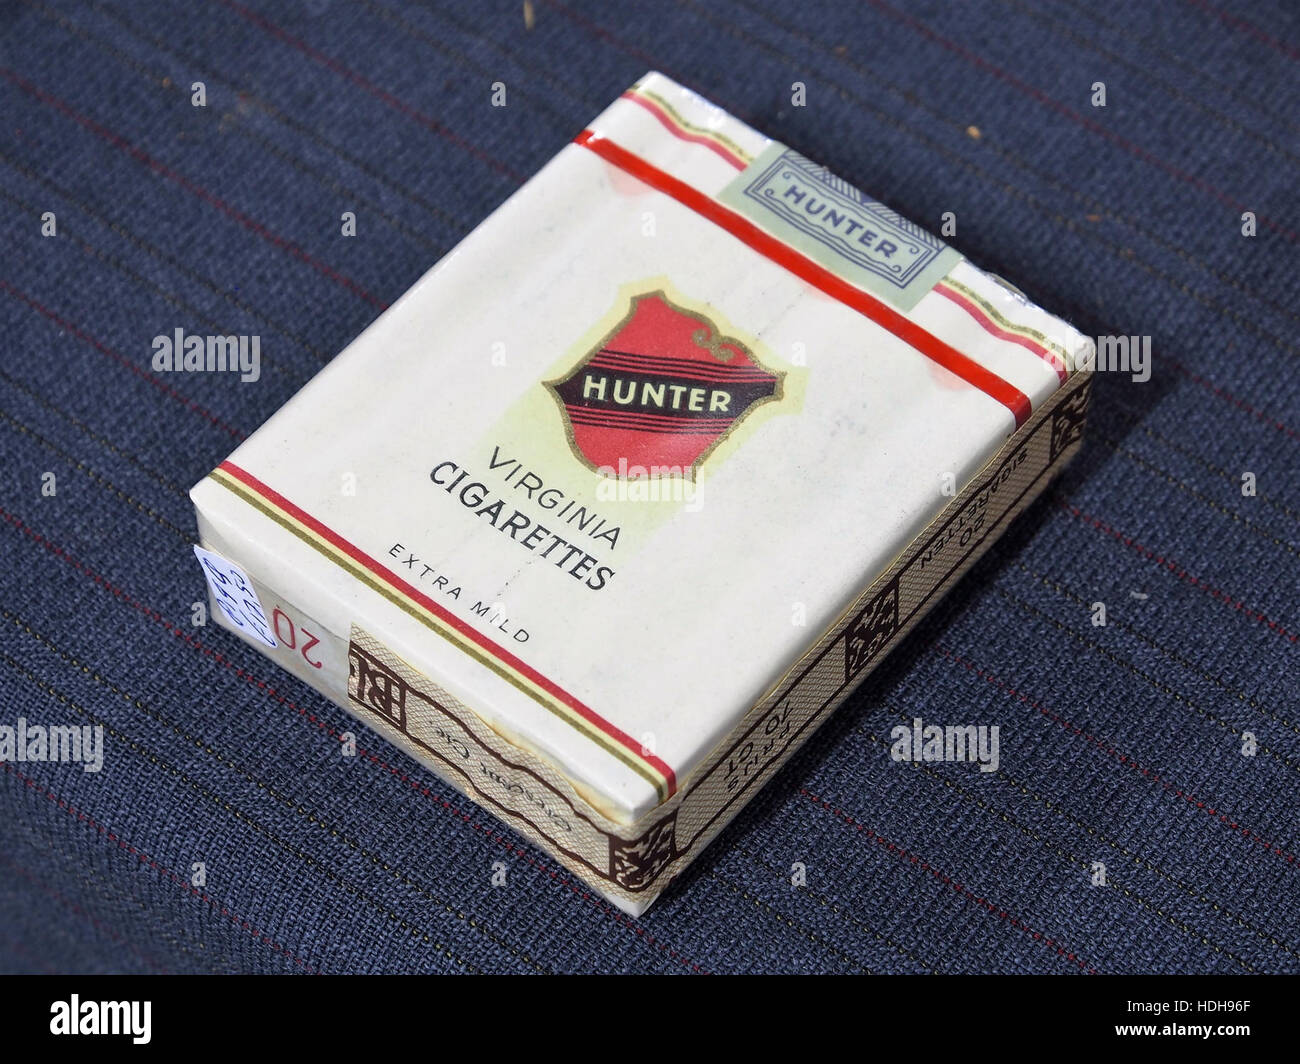 Hunter Zigaretten packen pic2 Stockfoto